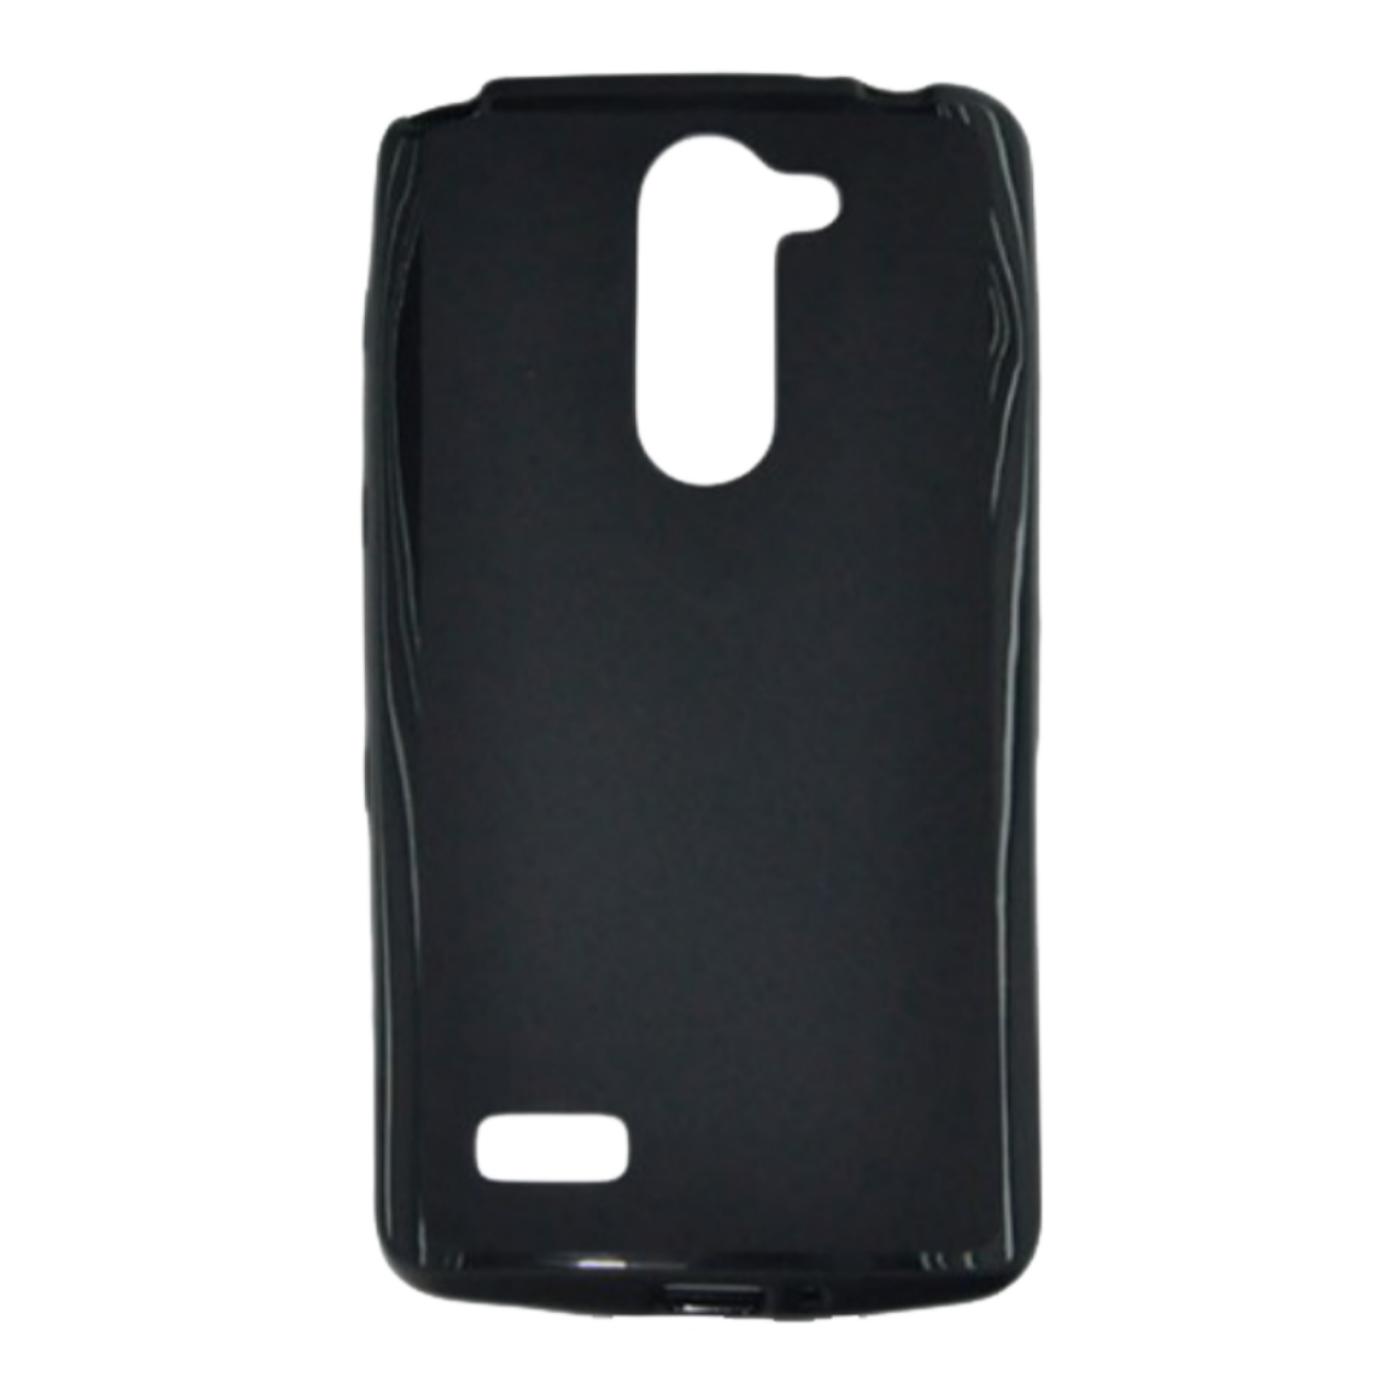 Futrola za mobitel LG Bello, silikonska crna